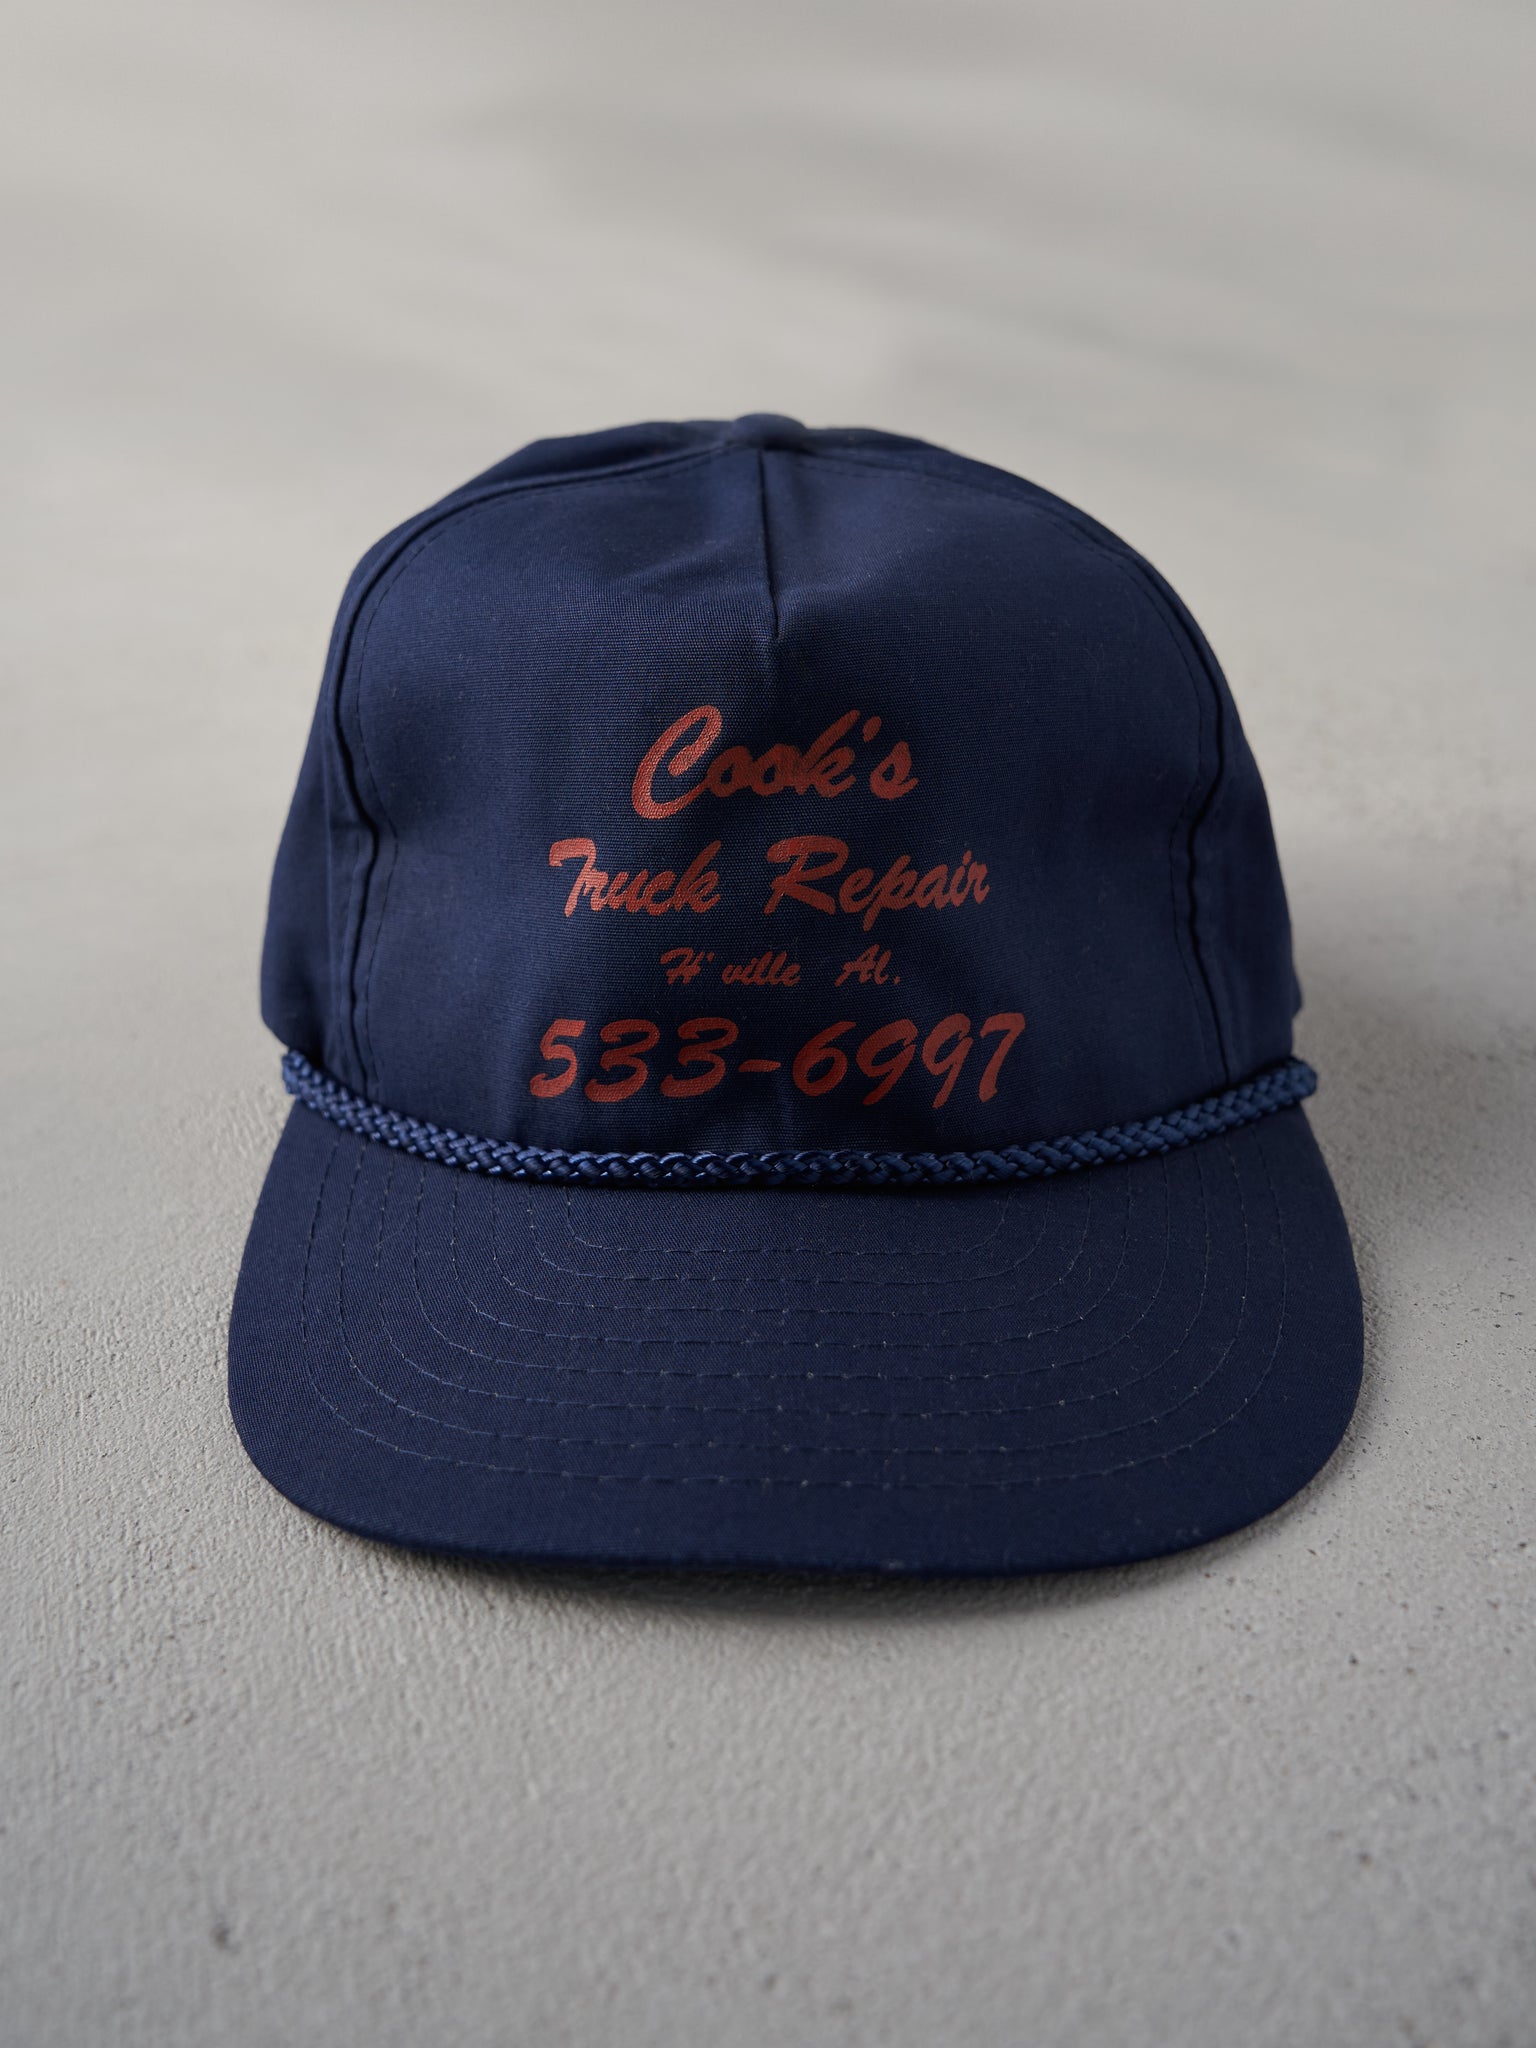 Vintage 70s Navy Cook's Truck Repair Hat